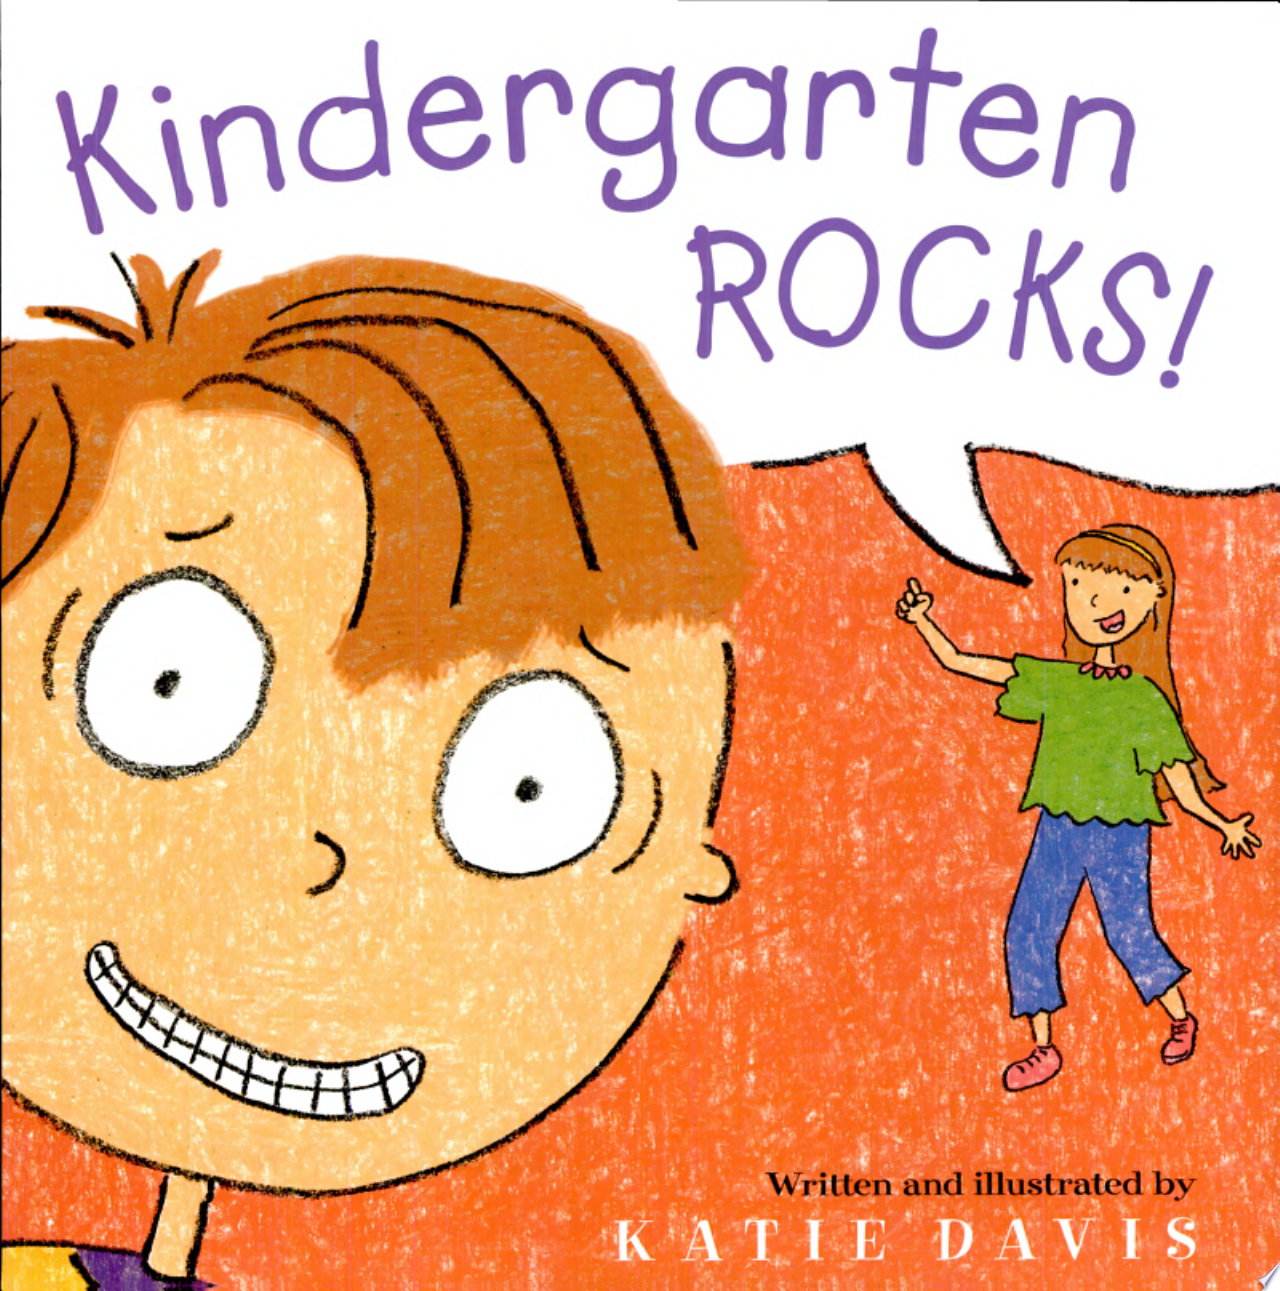 Image for "Kindergarten Rocks!"